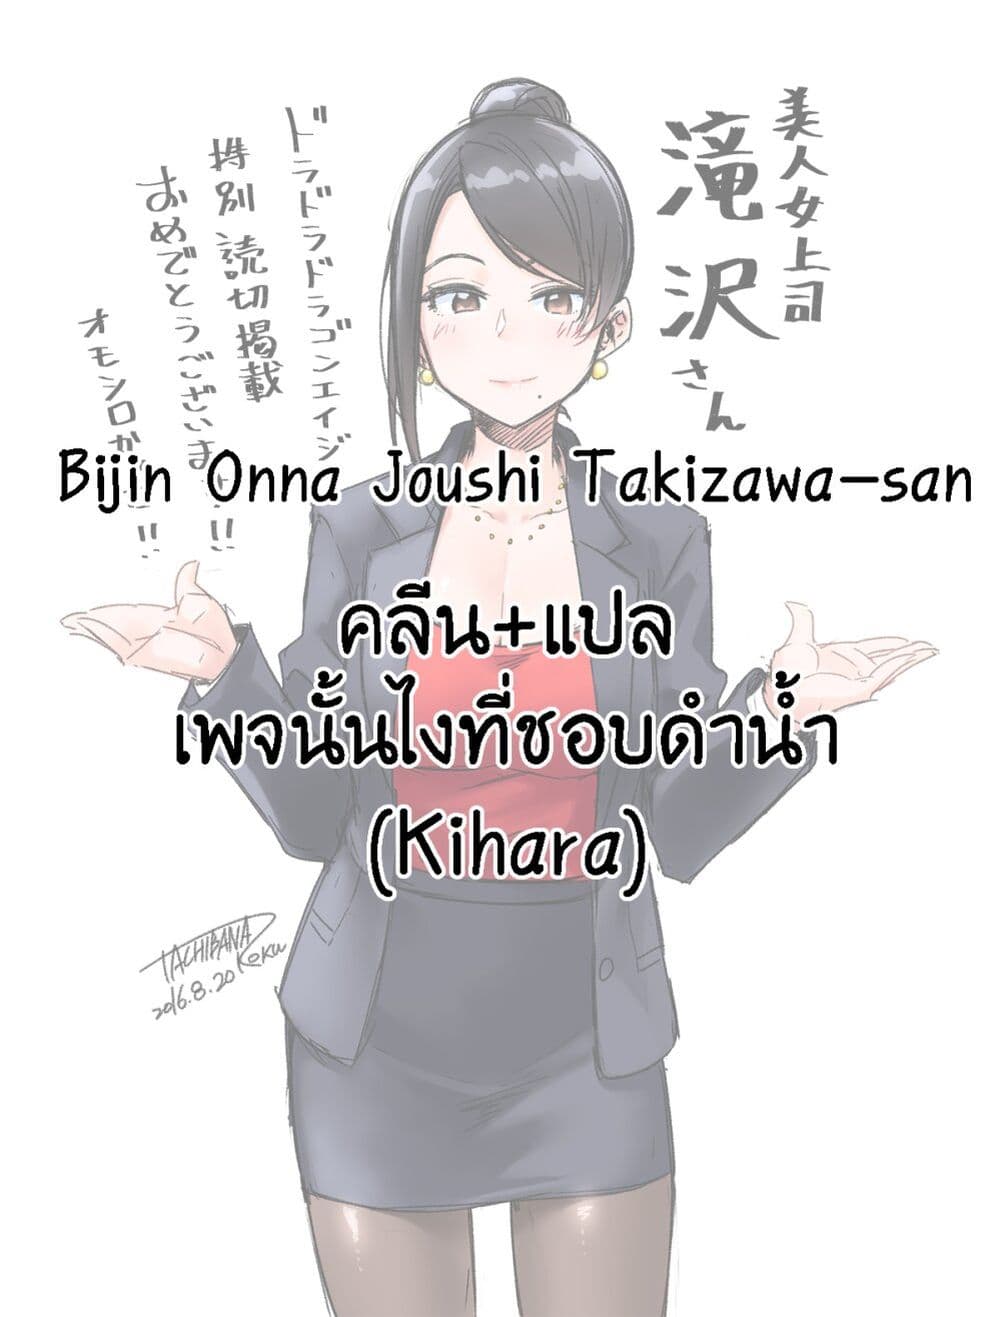 Bijin Onna Joushi Takizawa-san หัวหน้าสุดสวย ทากิซาวะซัง 21-21